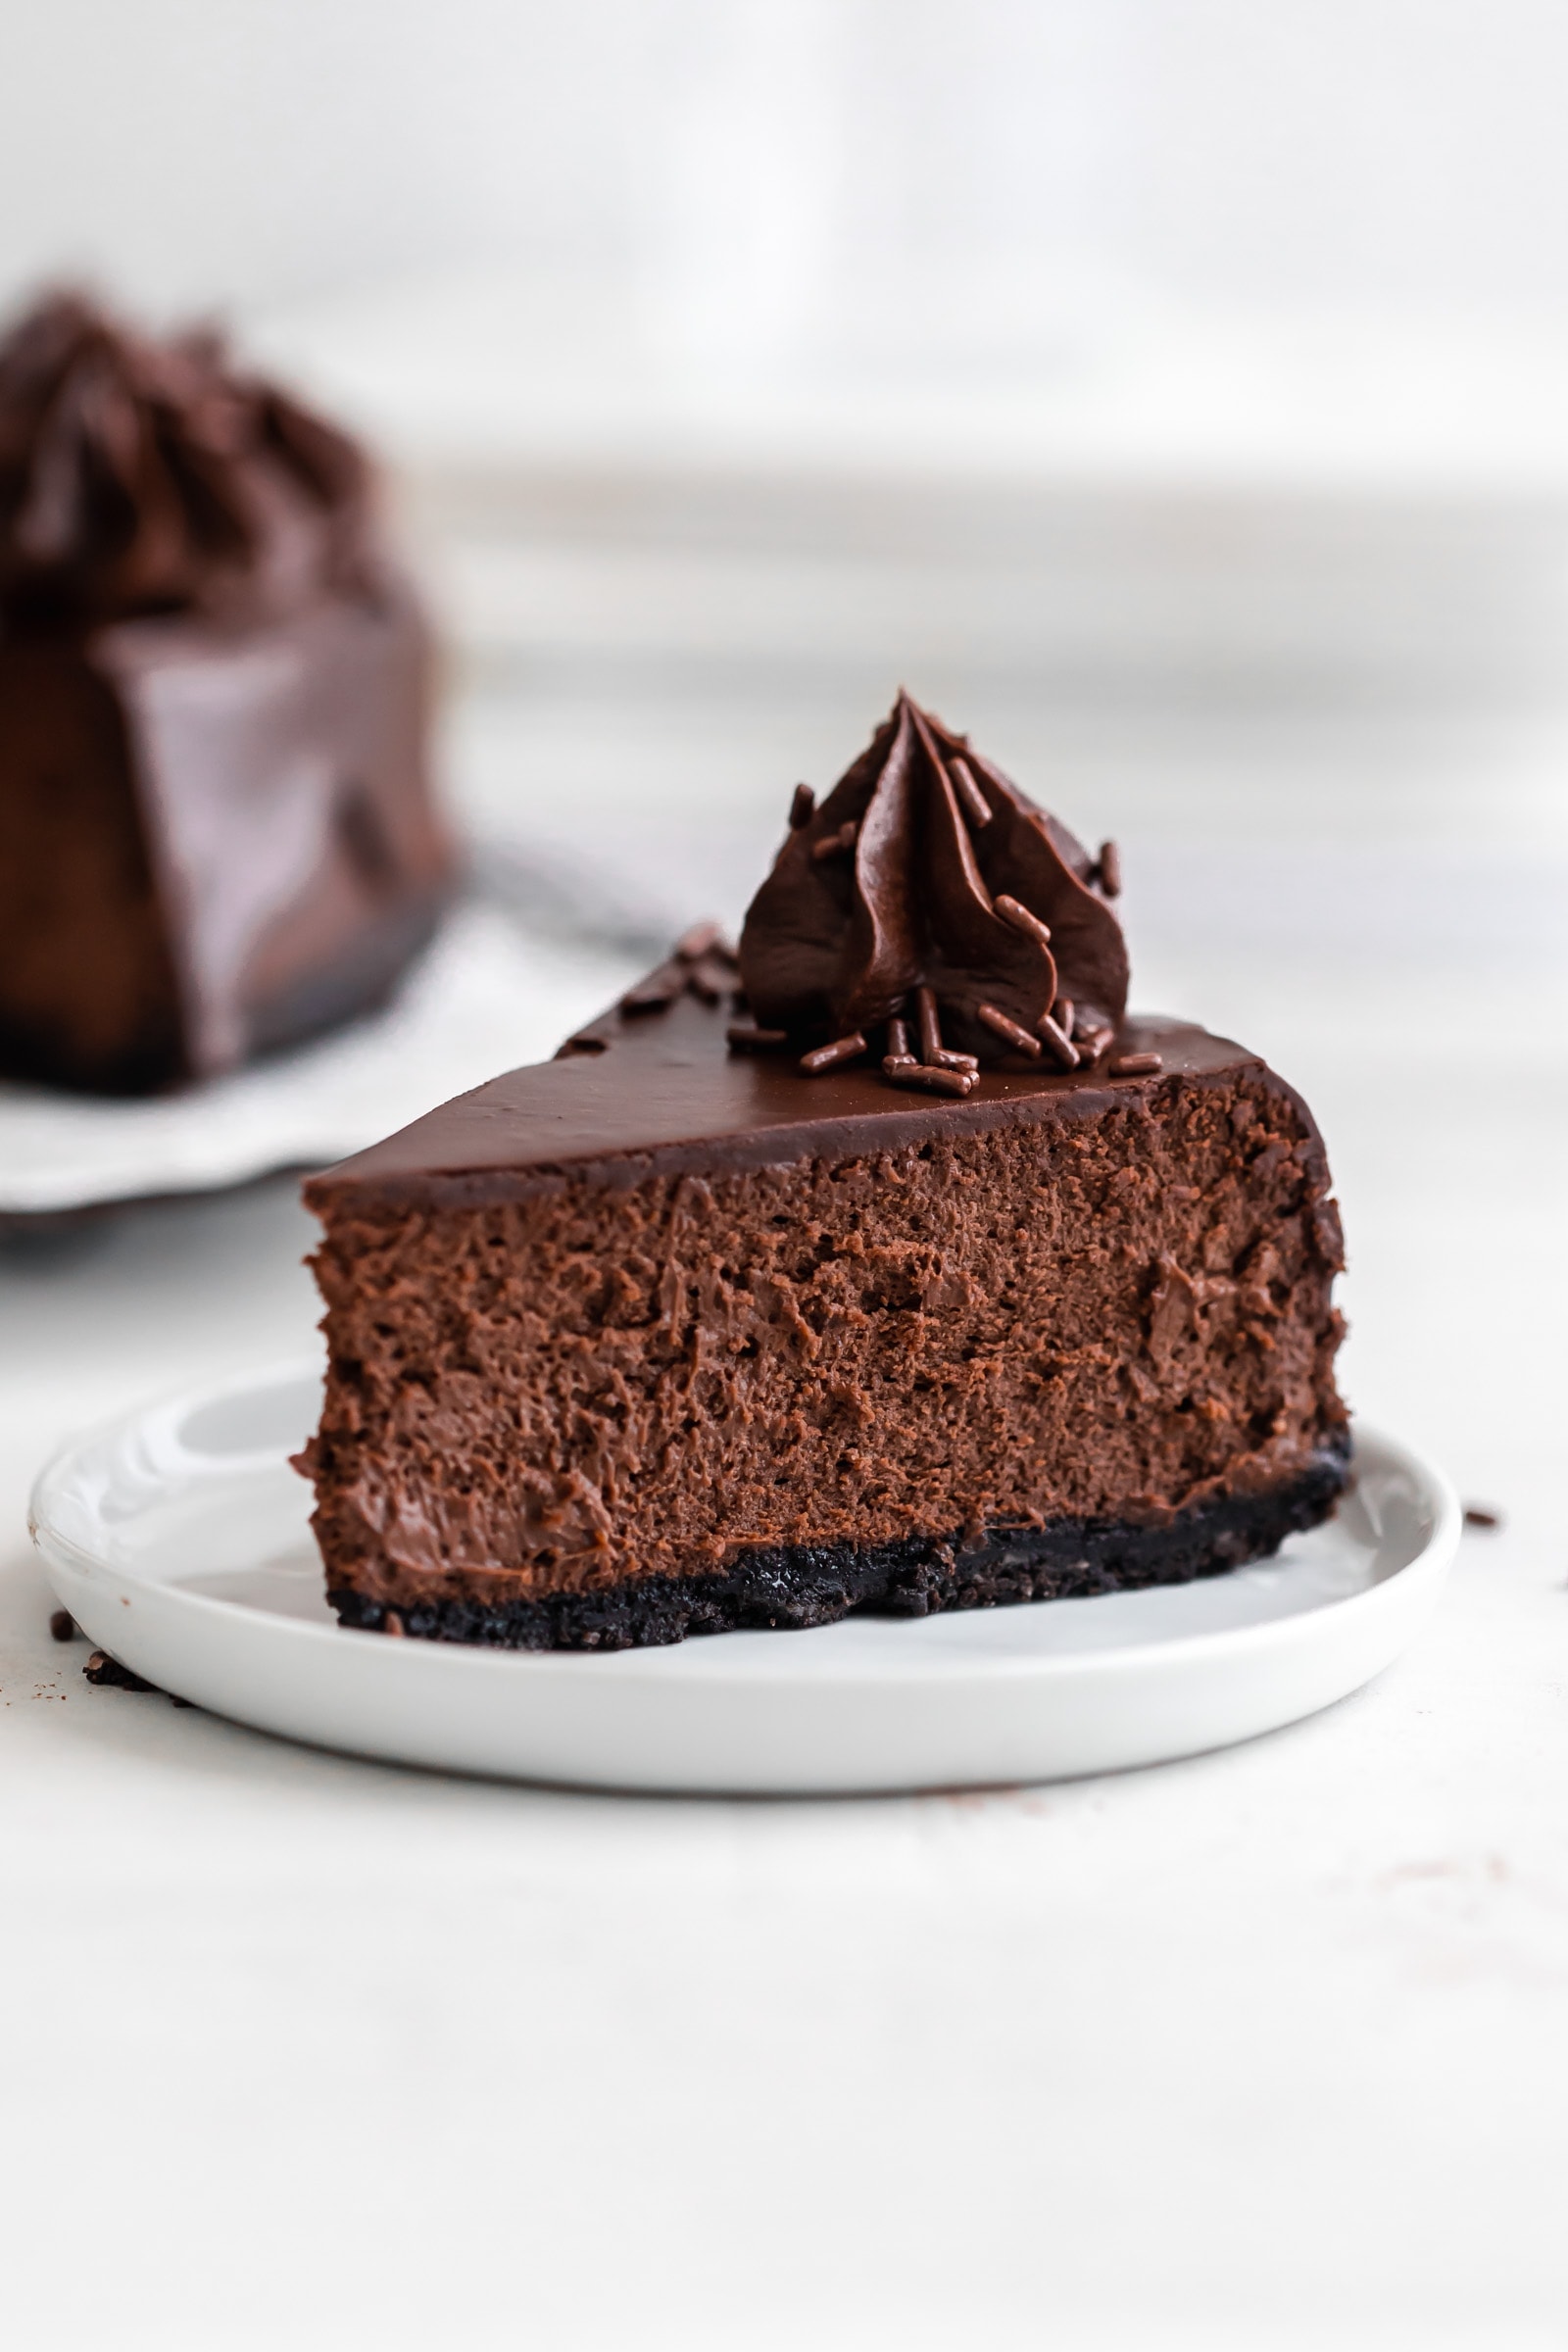 Godiva Semi-Sweet Chocolate Premium Baking Bar with 53% Cacao, 4 oz Box -  Walmart.com